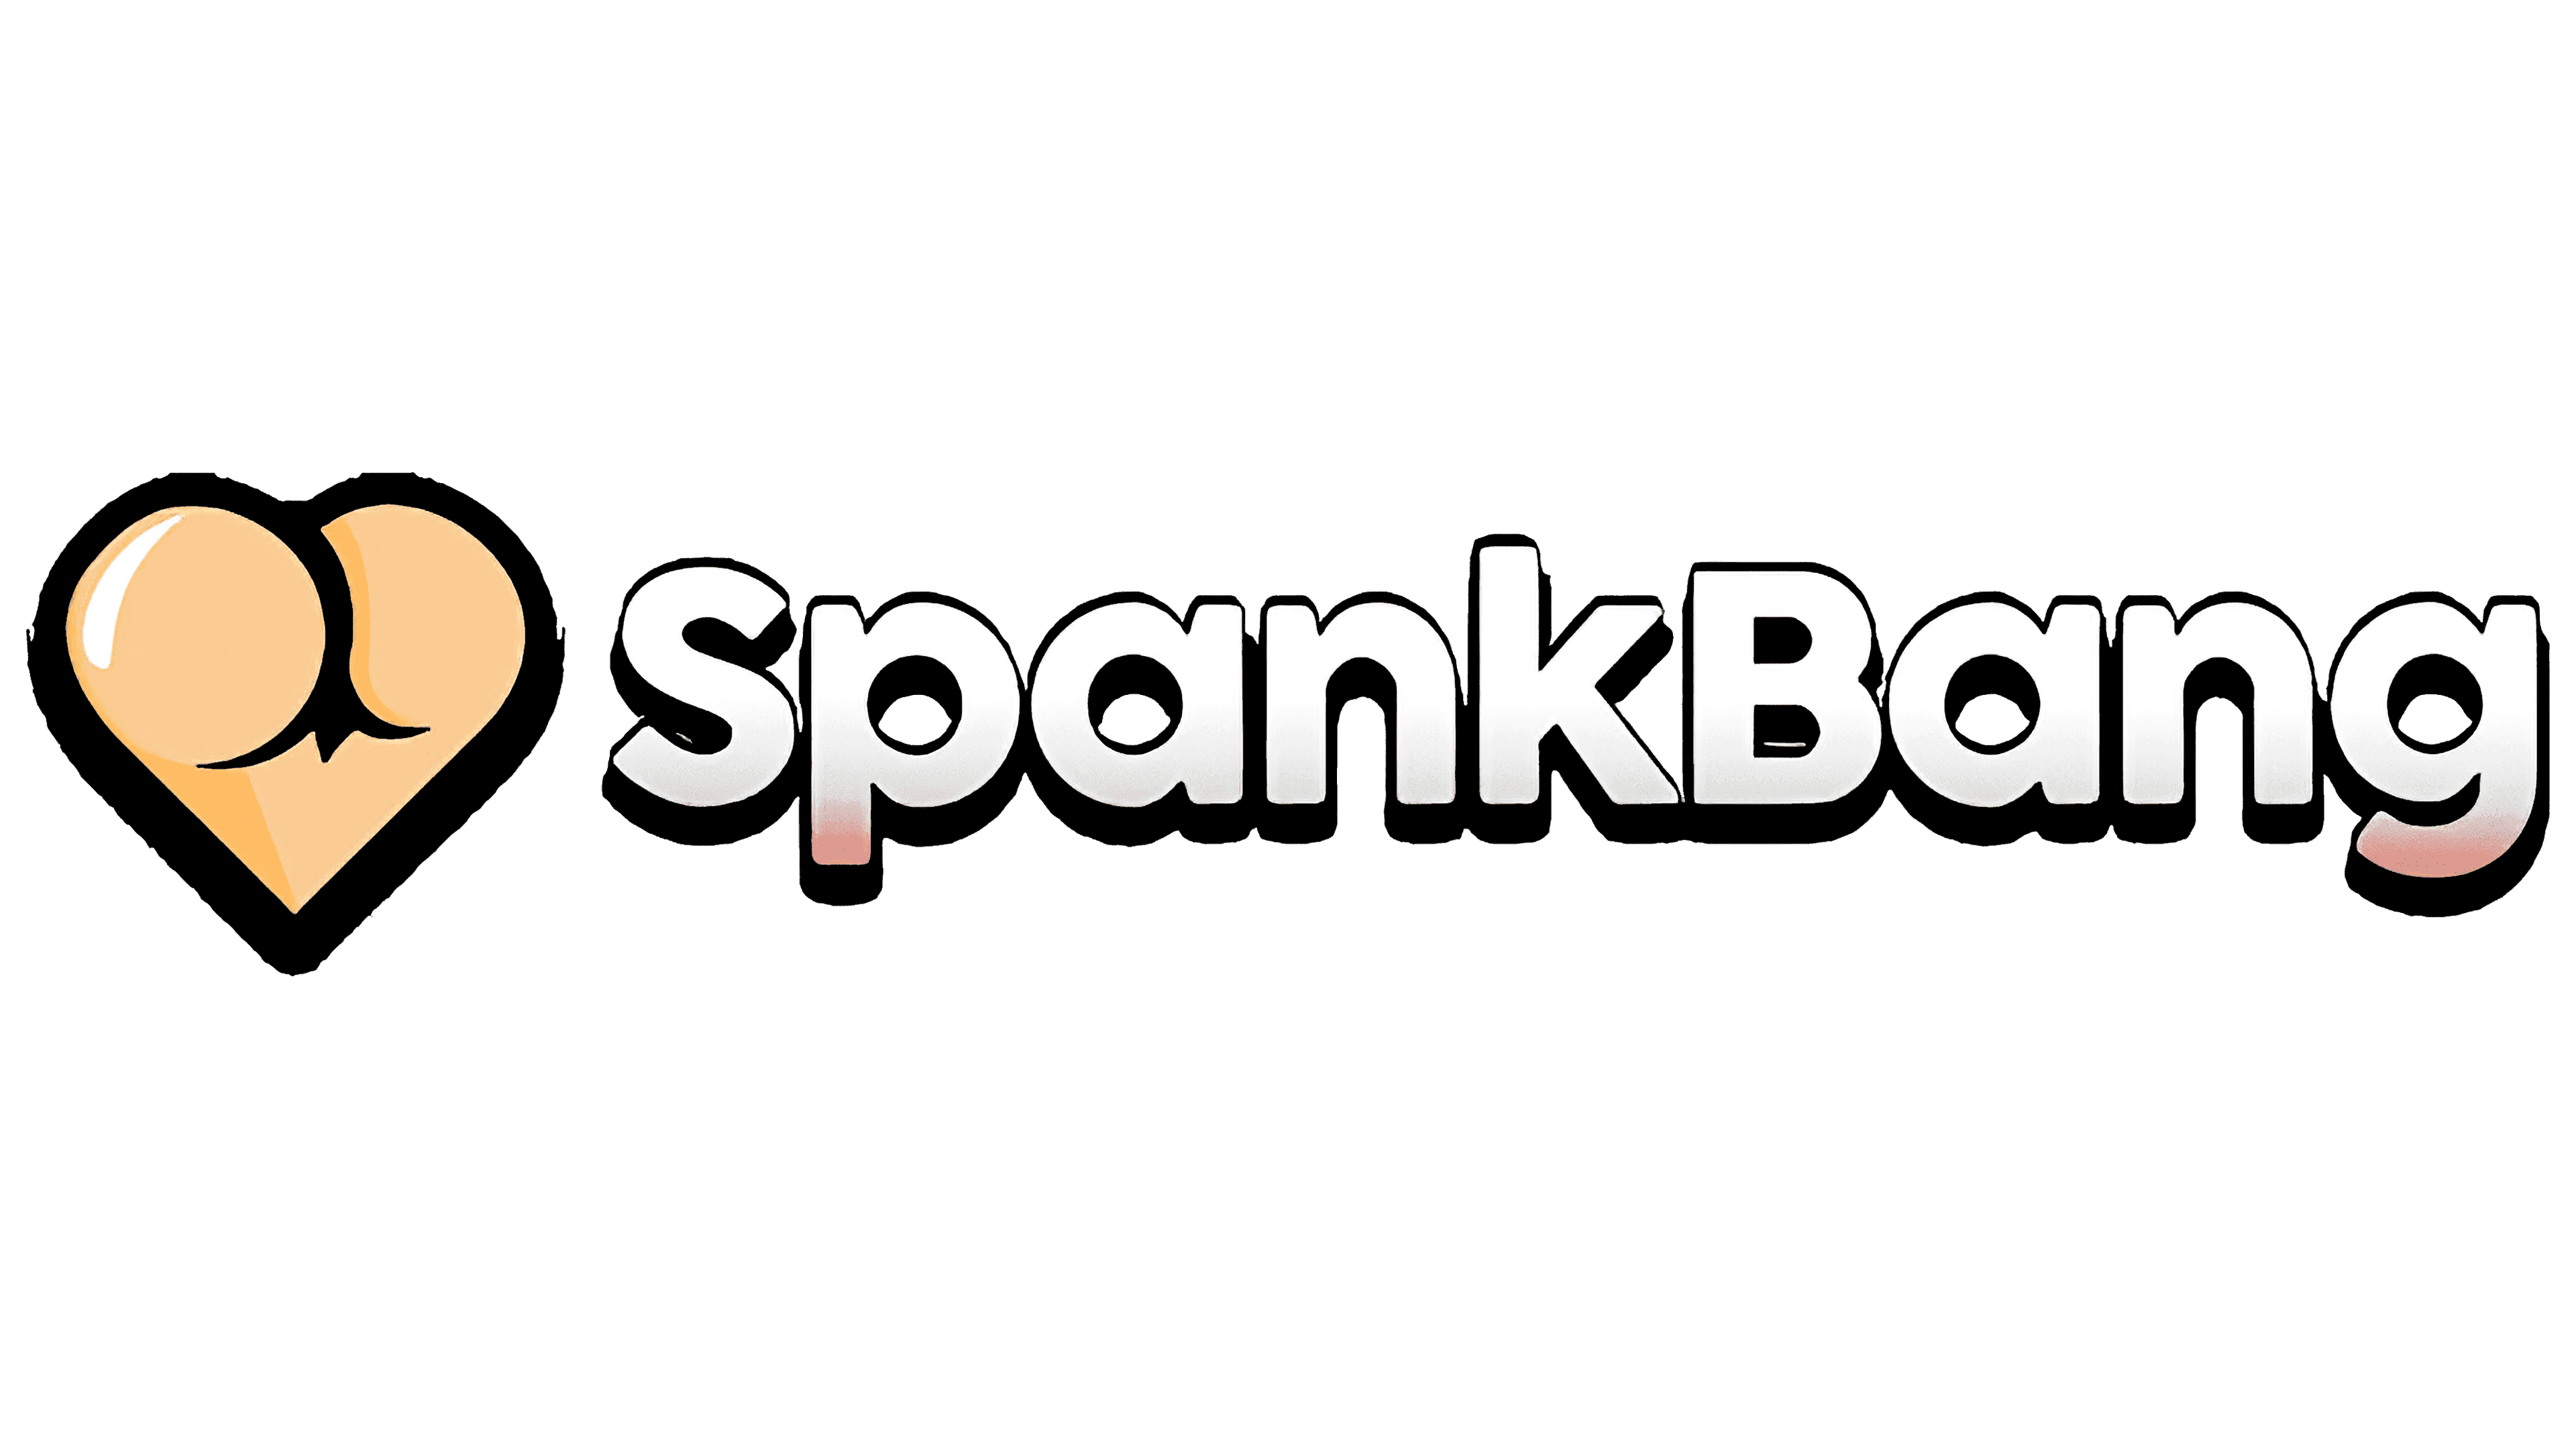 SpankBang Logo, symbol, meaning, history, PNG, brand